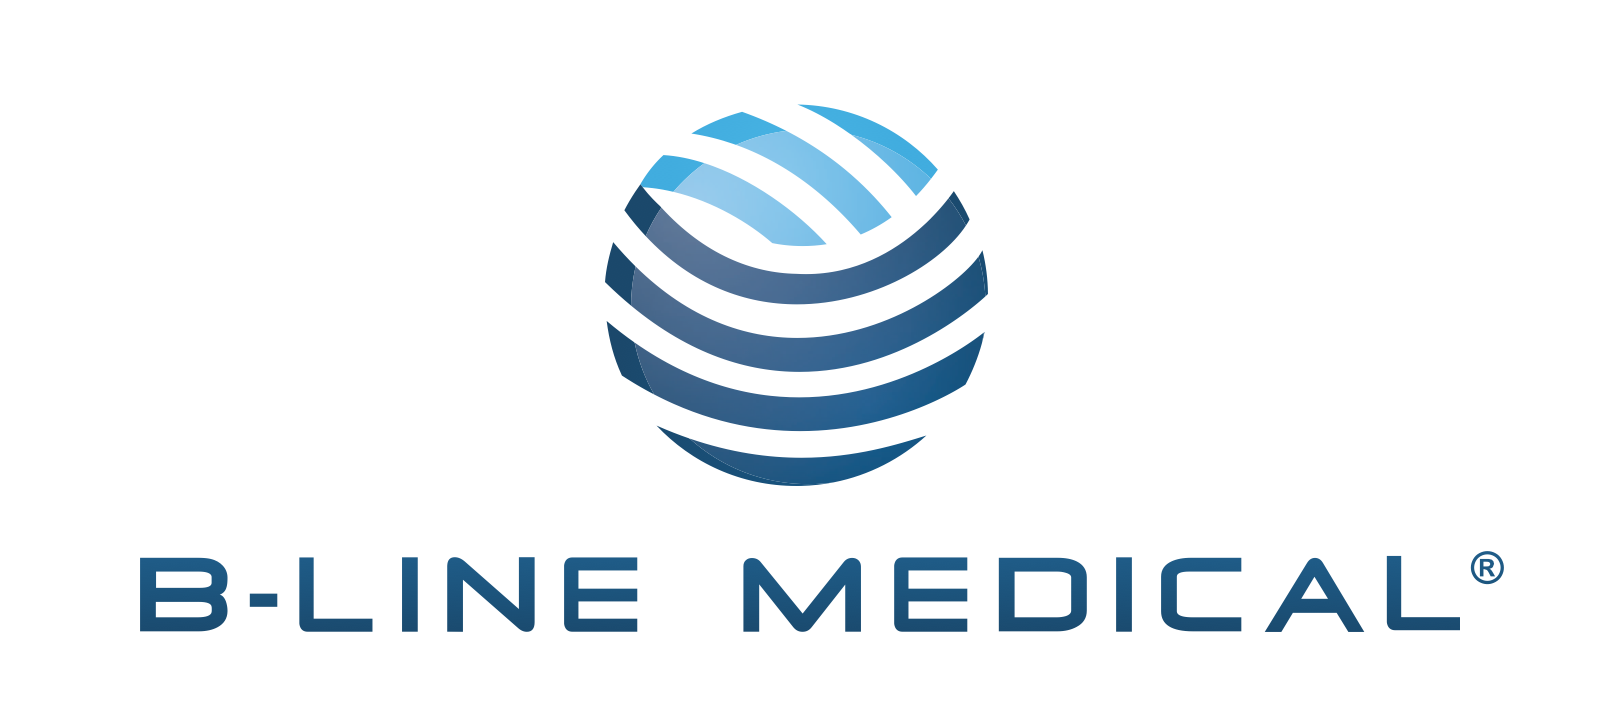 B-Line Medical Supports Sim Tech Innovation |